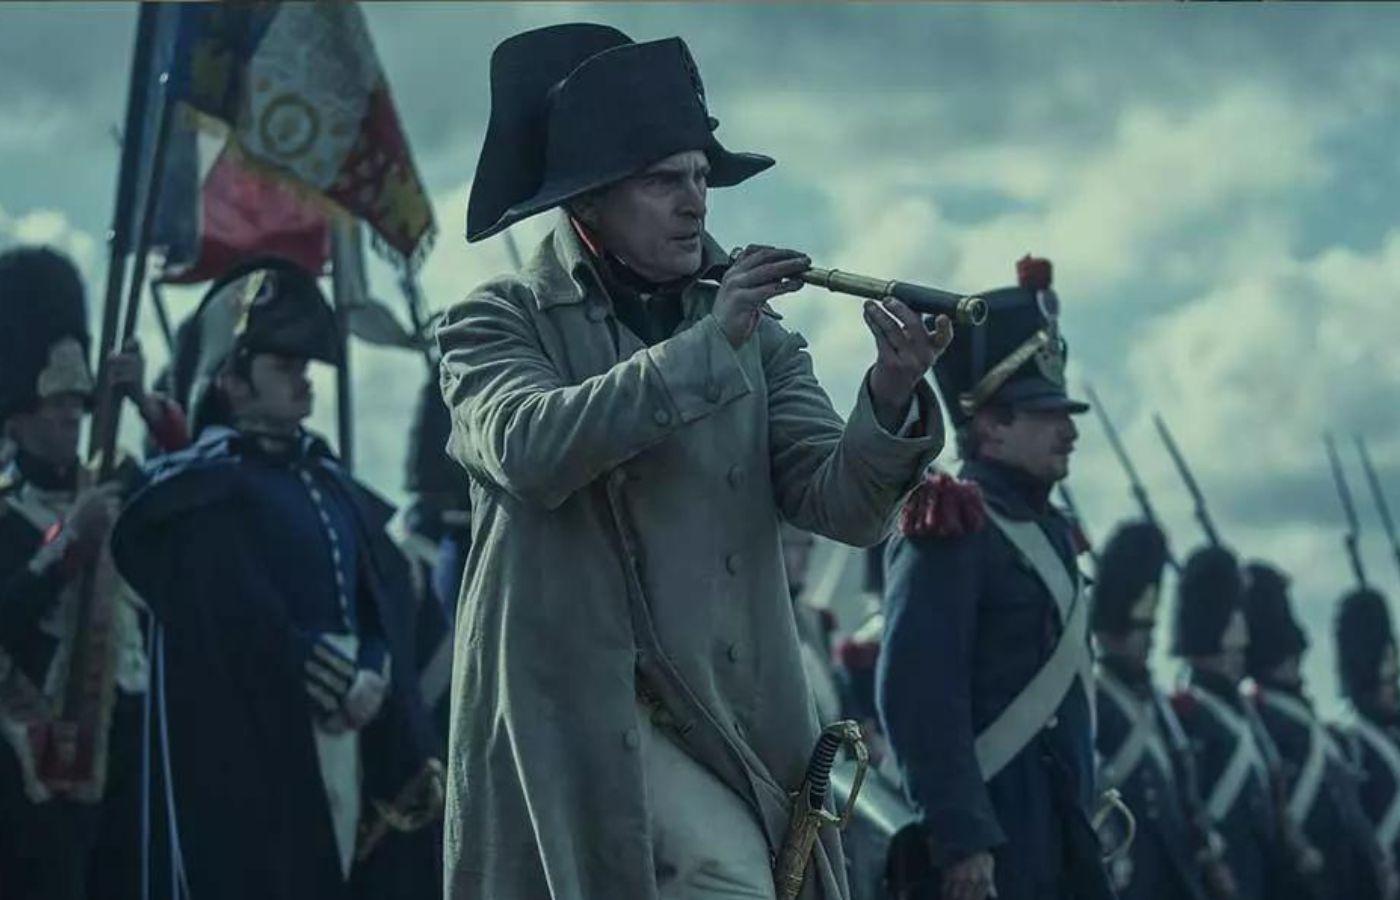 Joaquin Phoenix in Napoleon